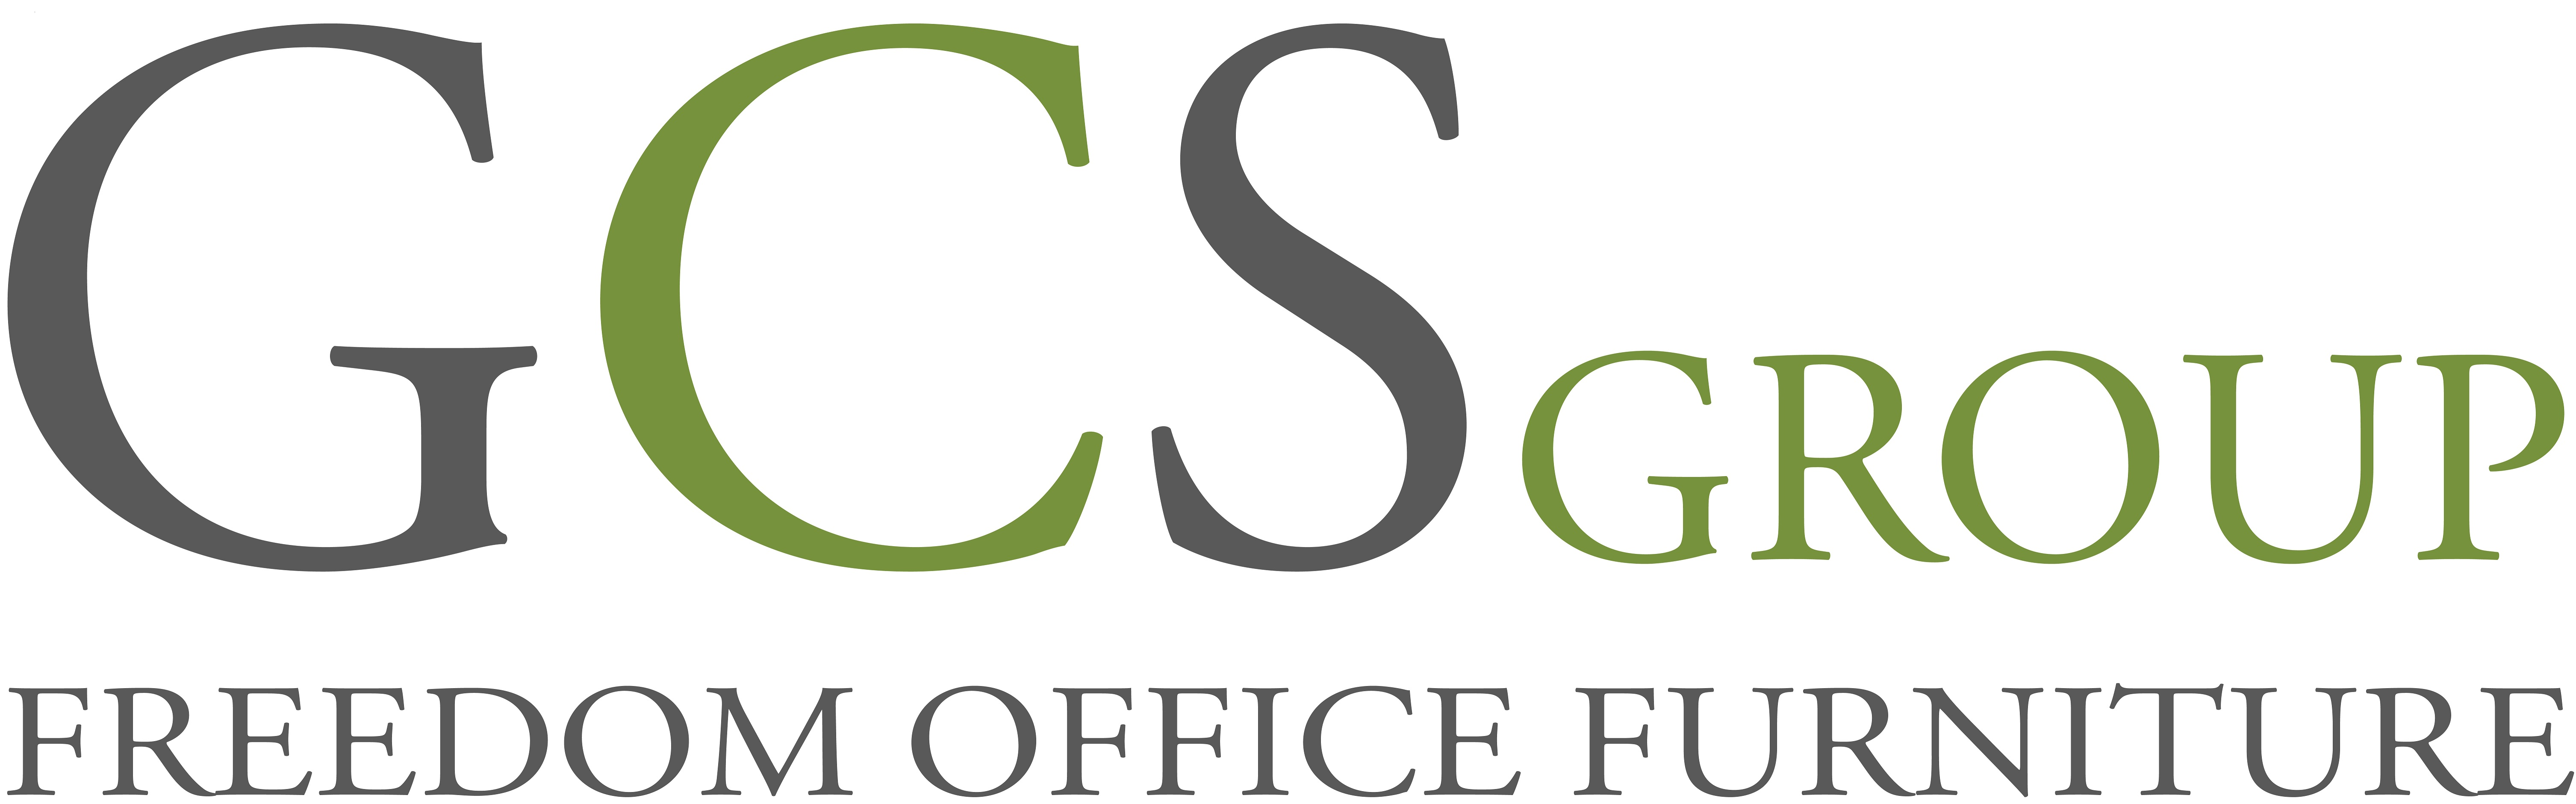 GCS Group Logo